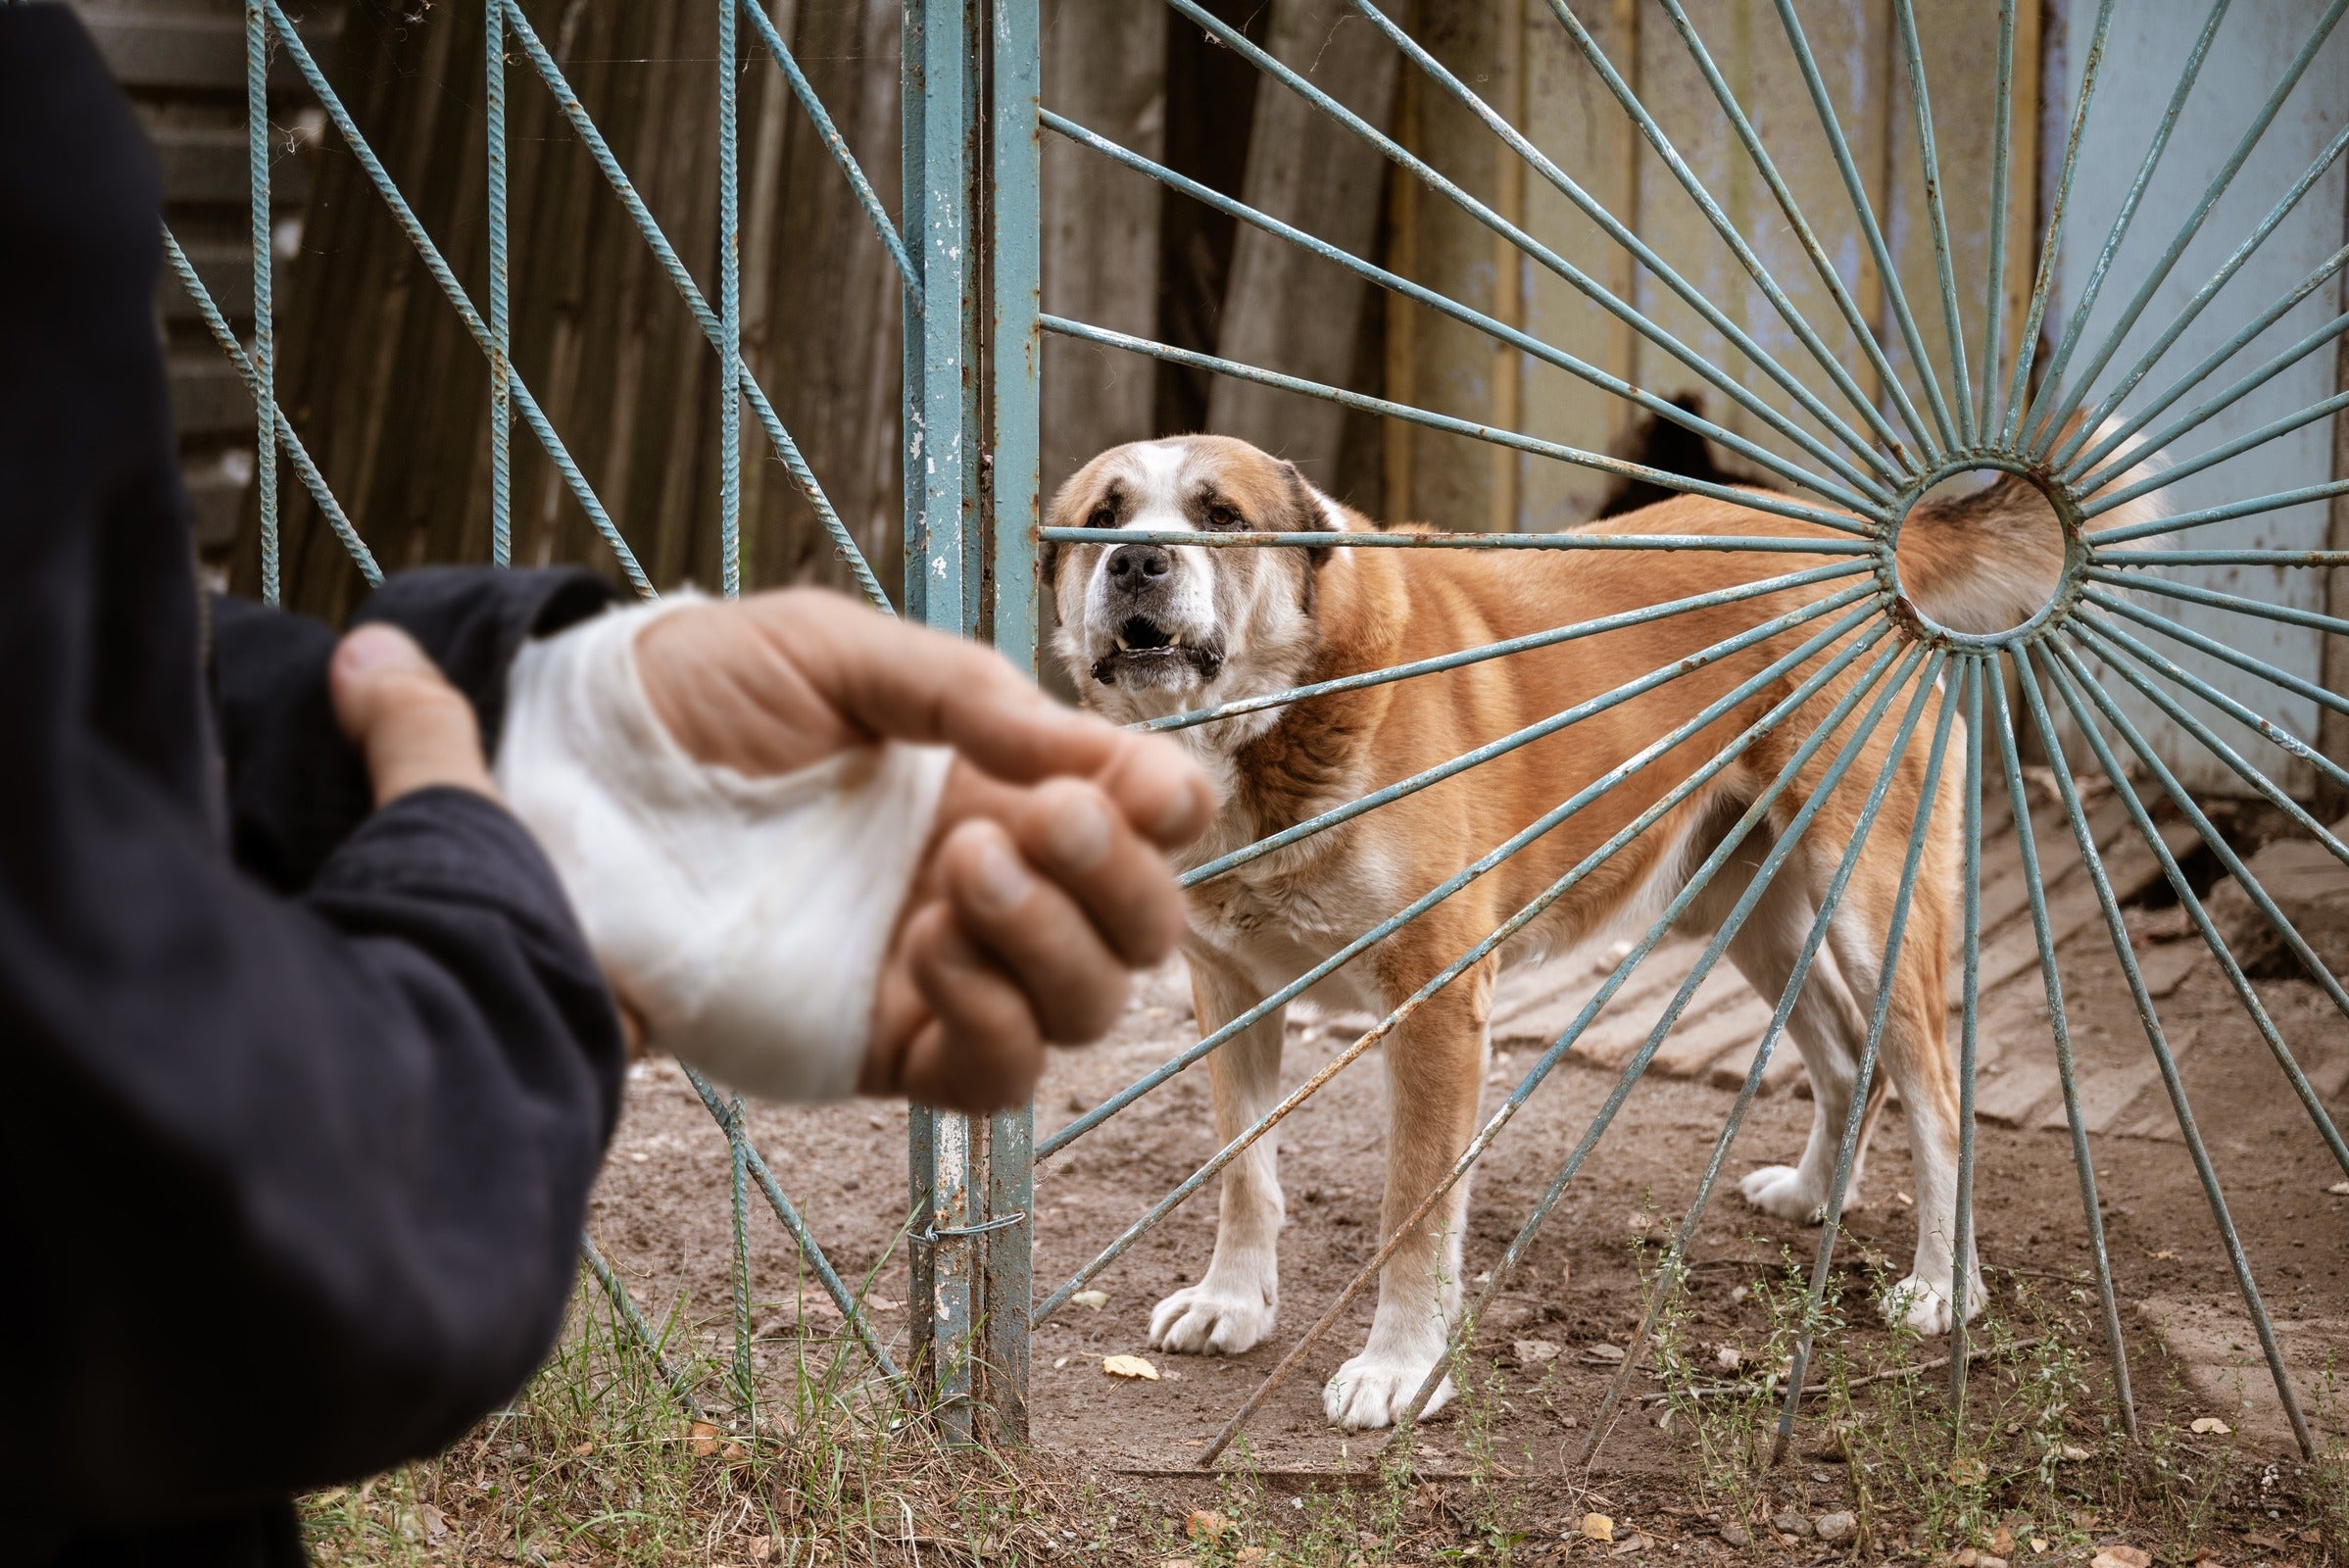 A dog bite victim's legal options for compensation